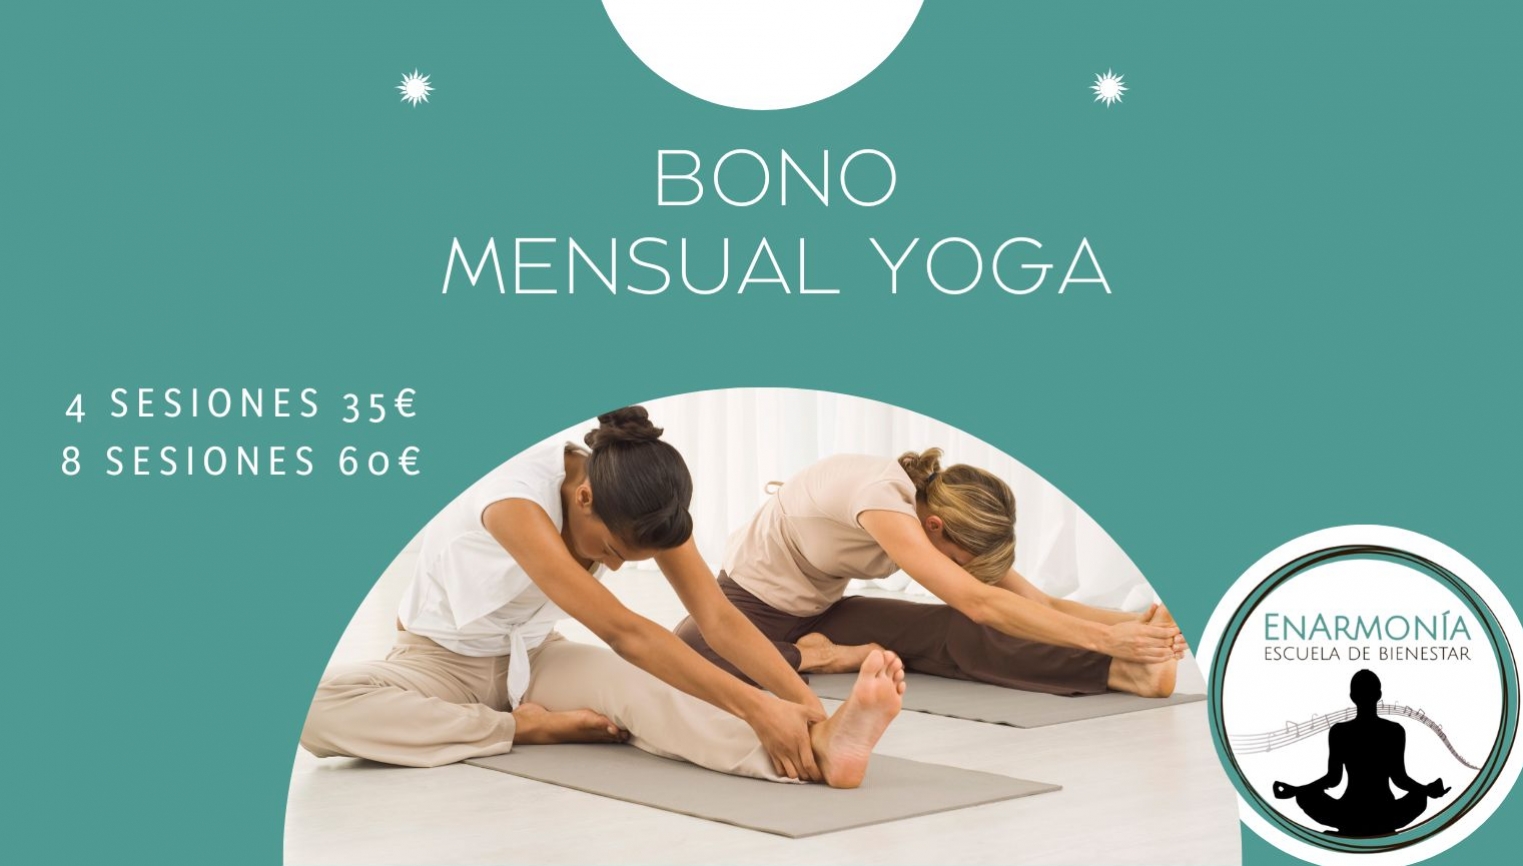 Bono Mensual Yoga - foto 1/1